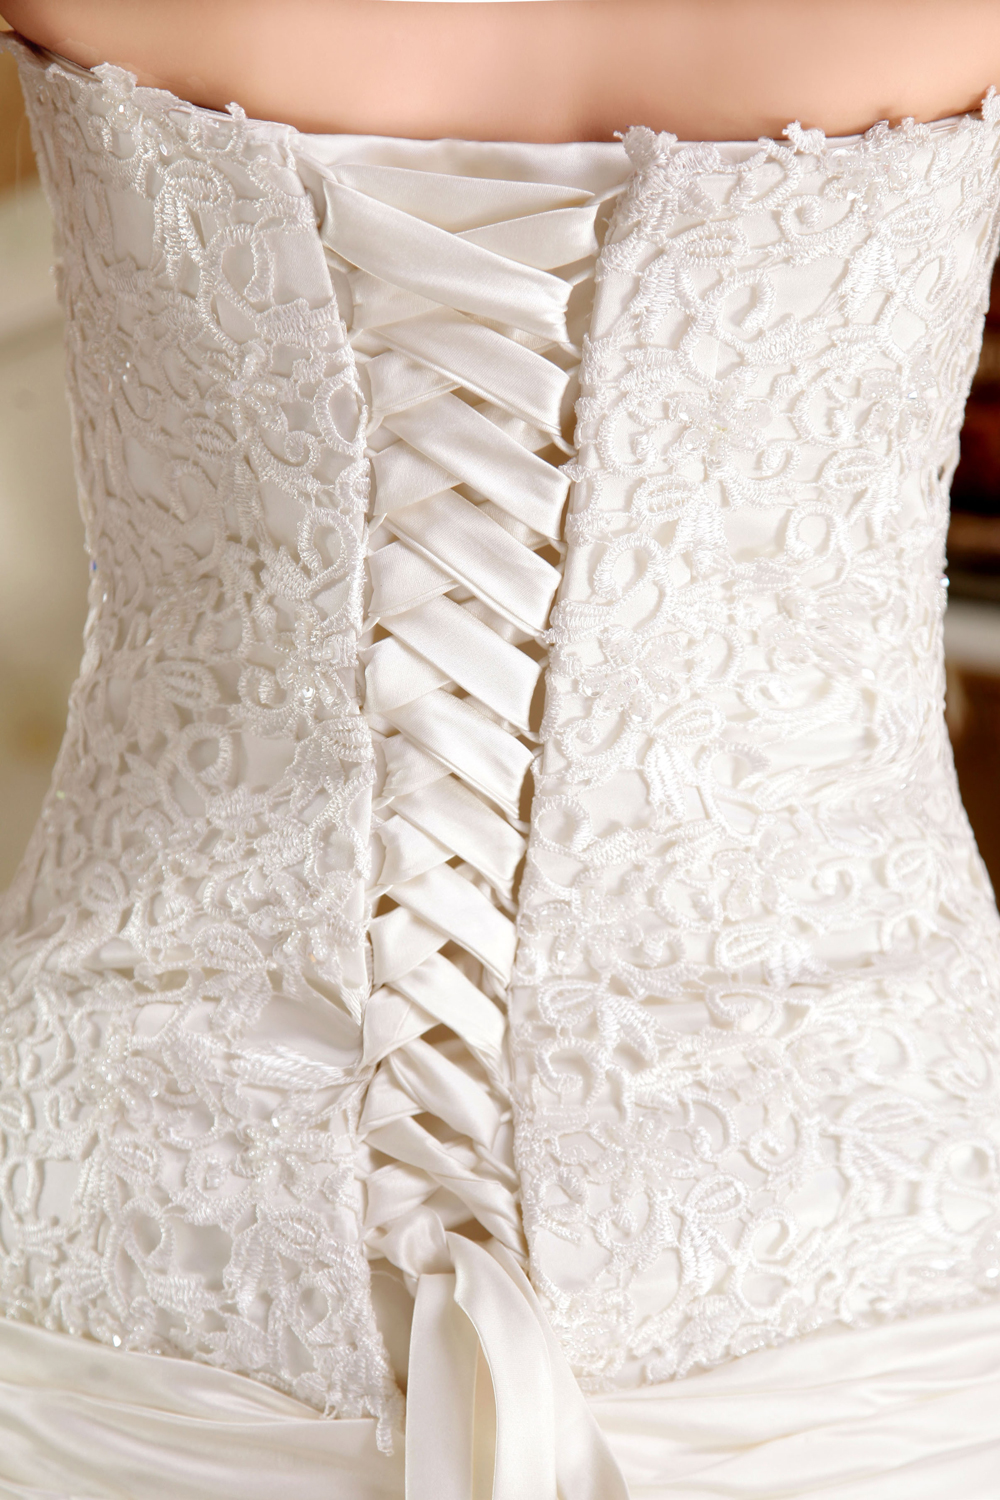 White A-Line / Princess Strapless Brush Train Taffeta Appliques Wedding Dress